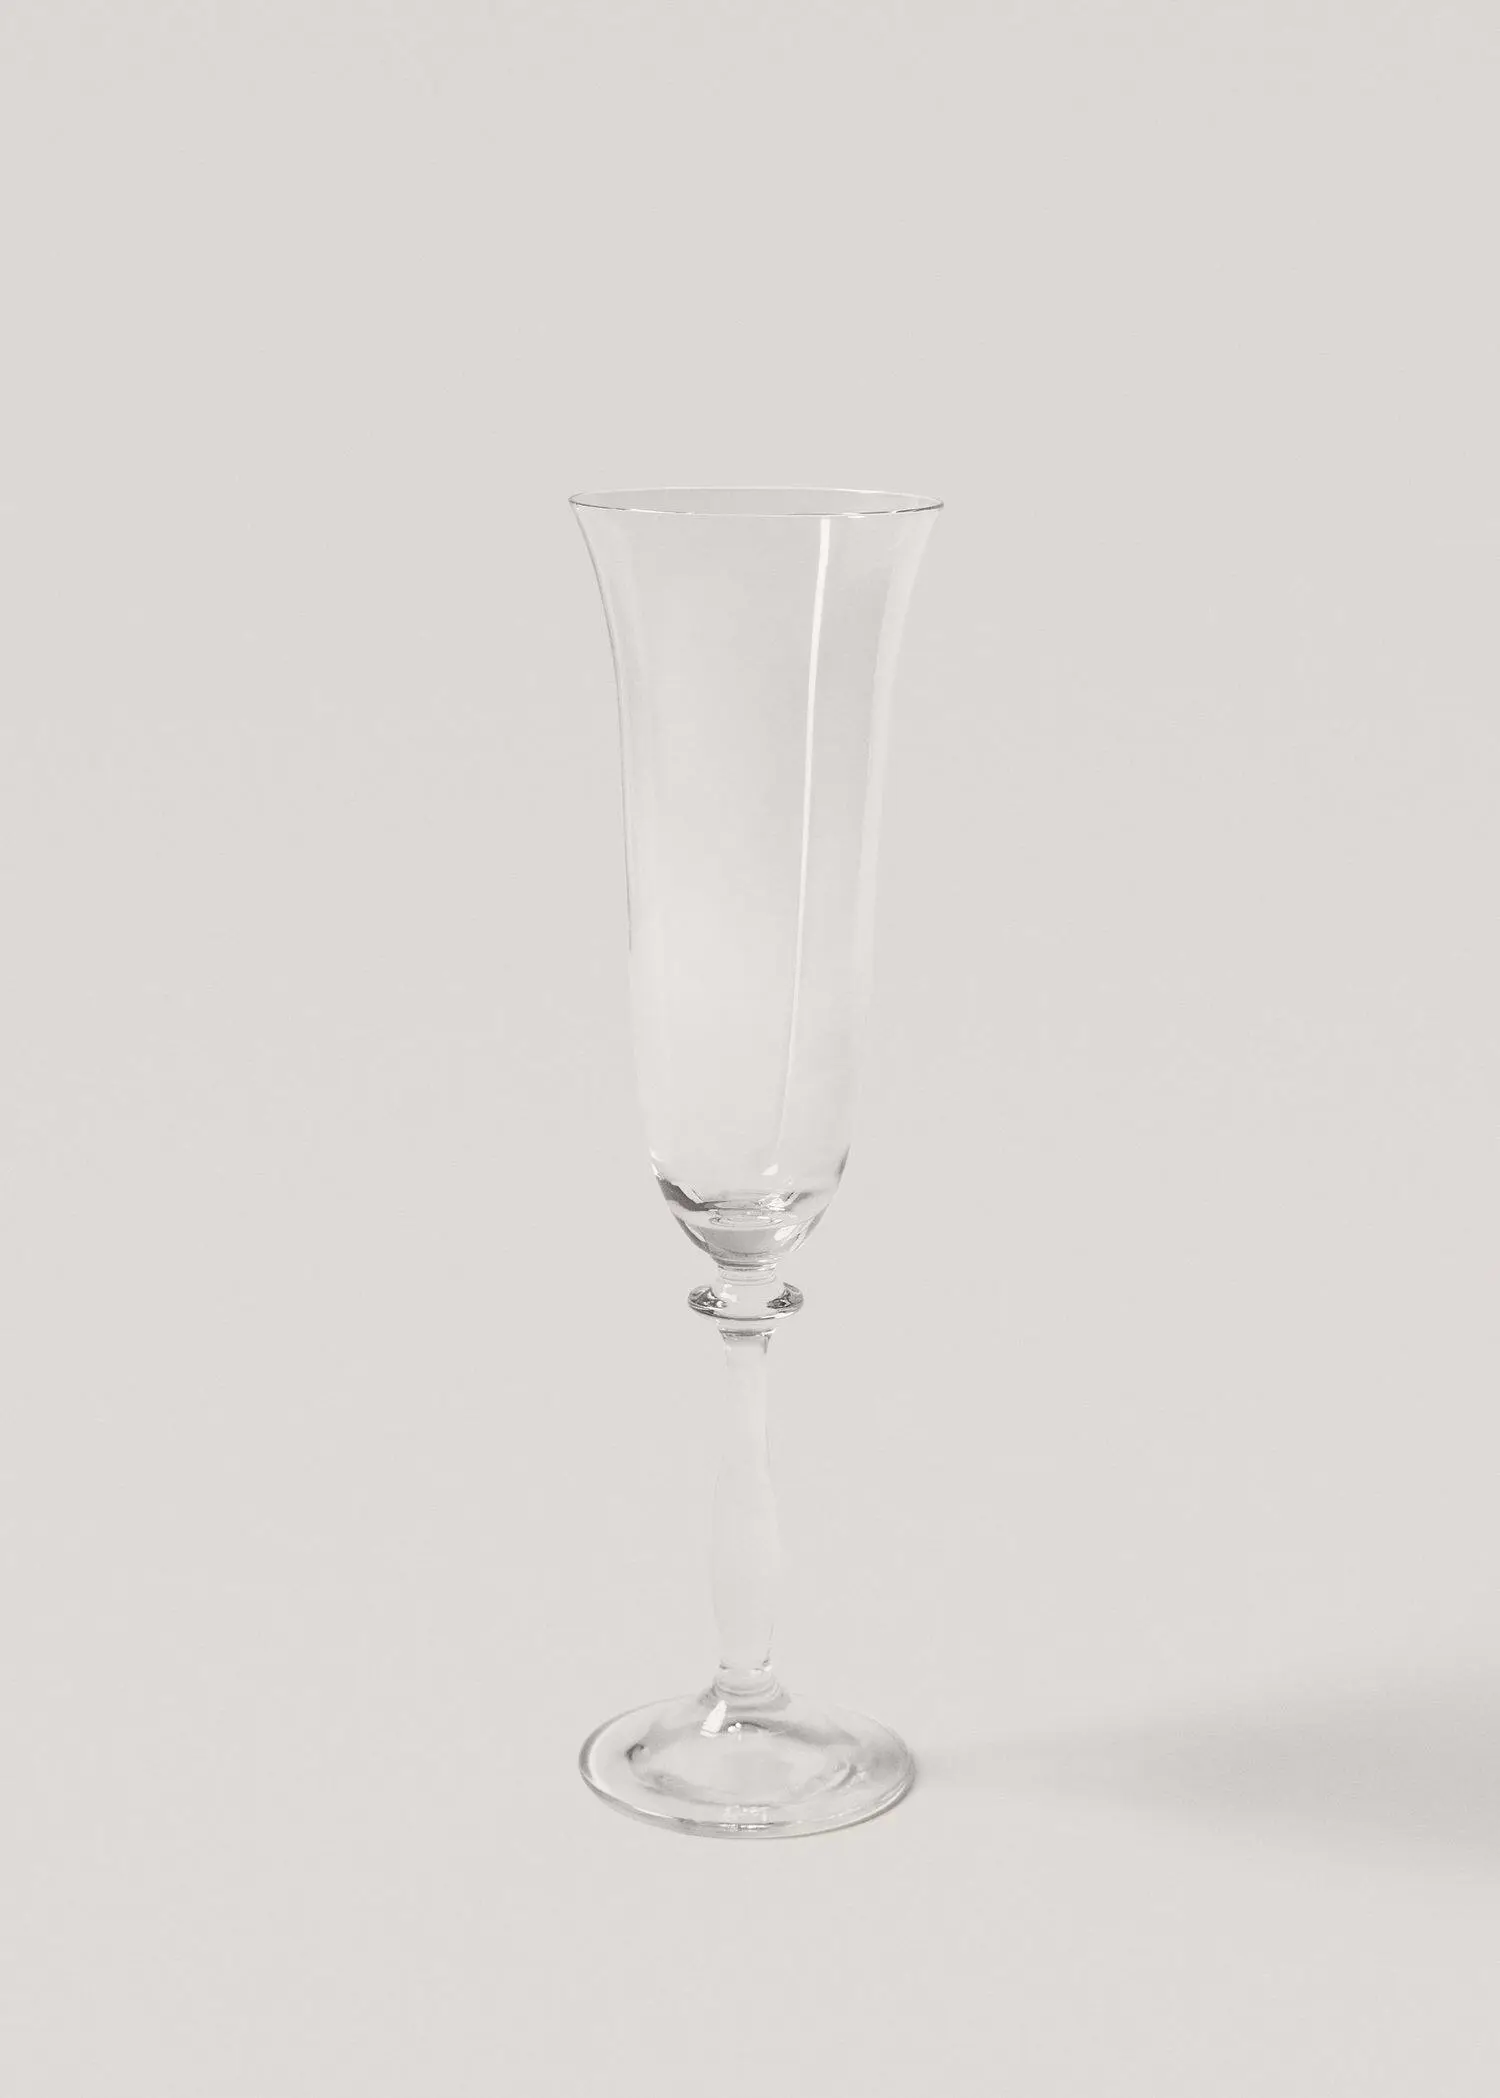 Mango Glass flute goblet. 1